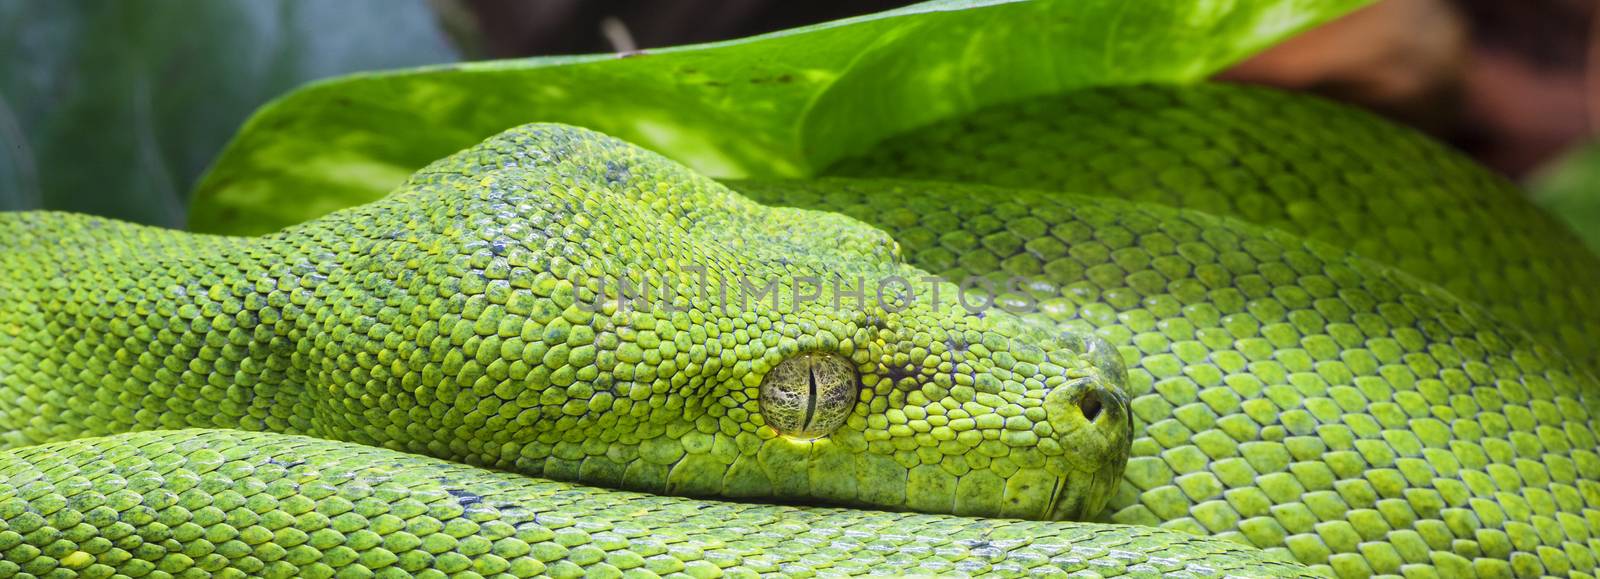 Panoramic green python by vwalakte